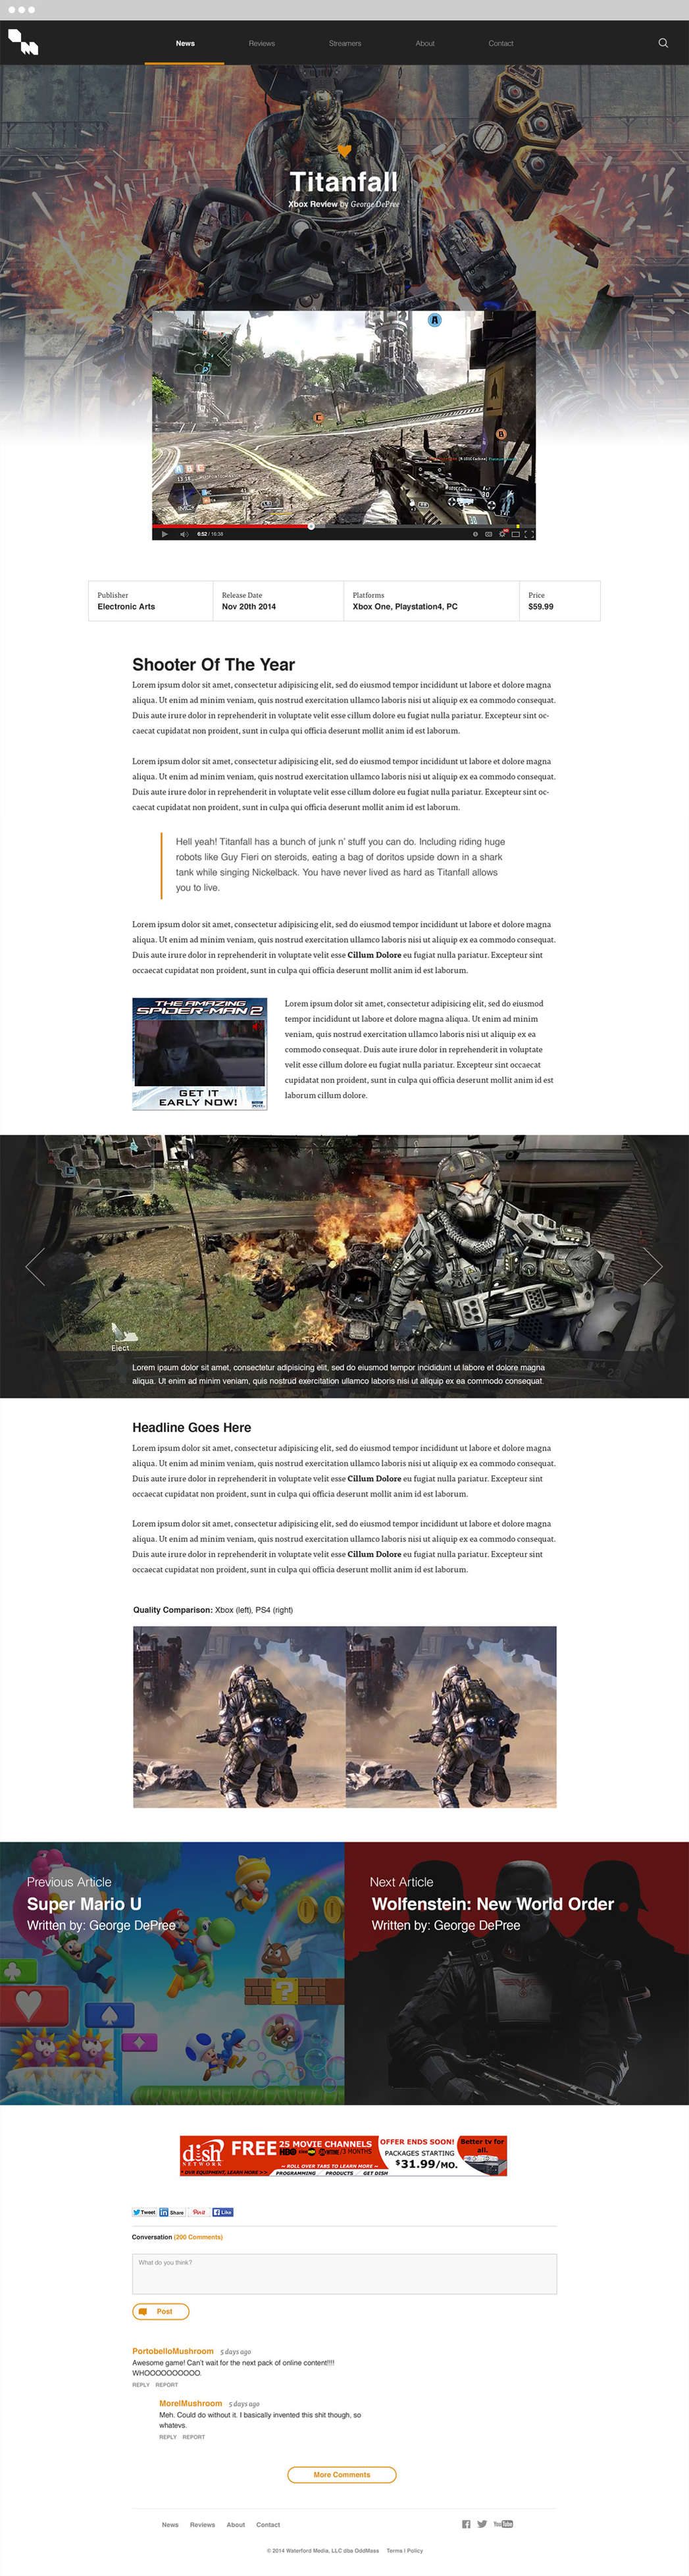 Adobe Portfolio video game culture Website brand portrait review